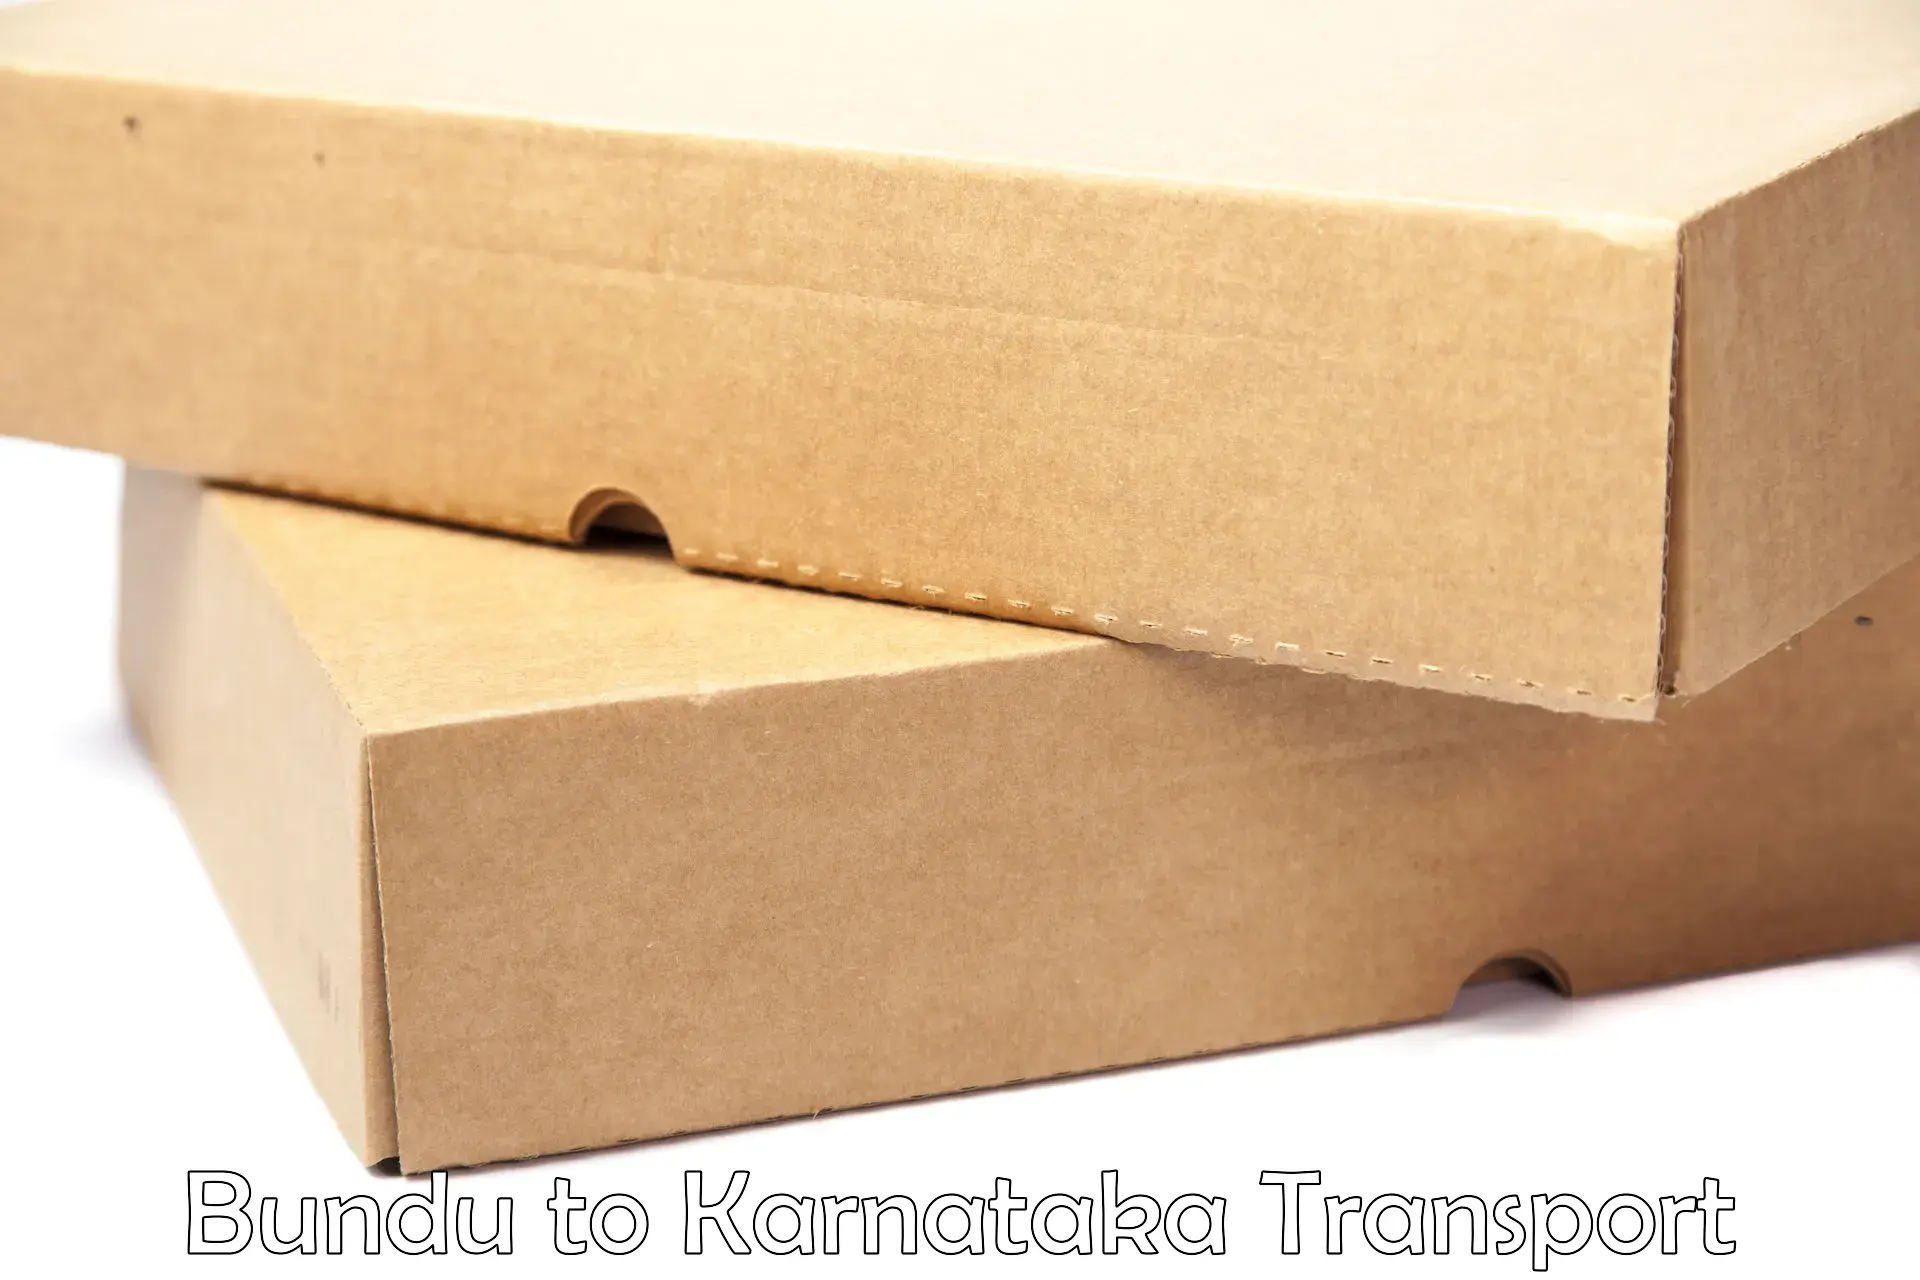 Two wheeler parcel service Bundu to Kanjarakatte